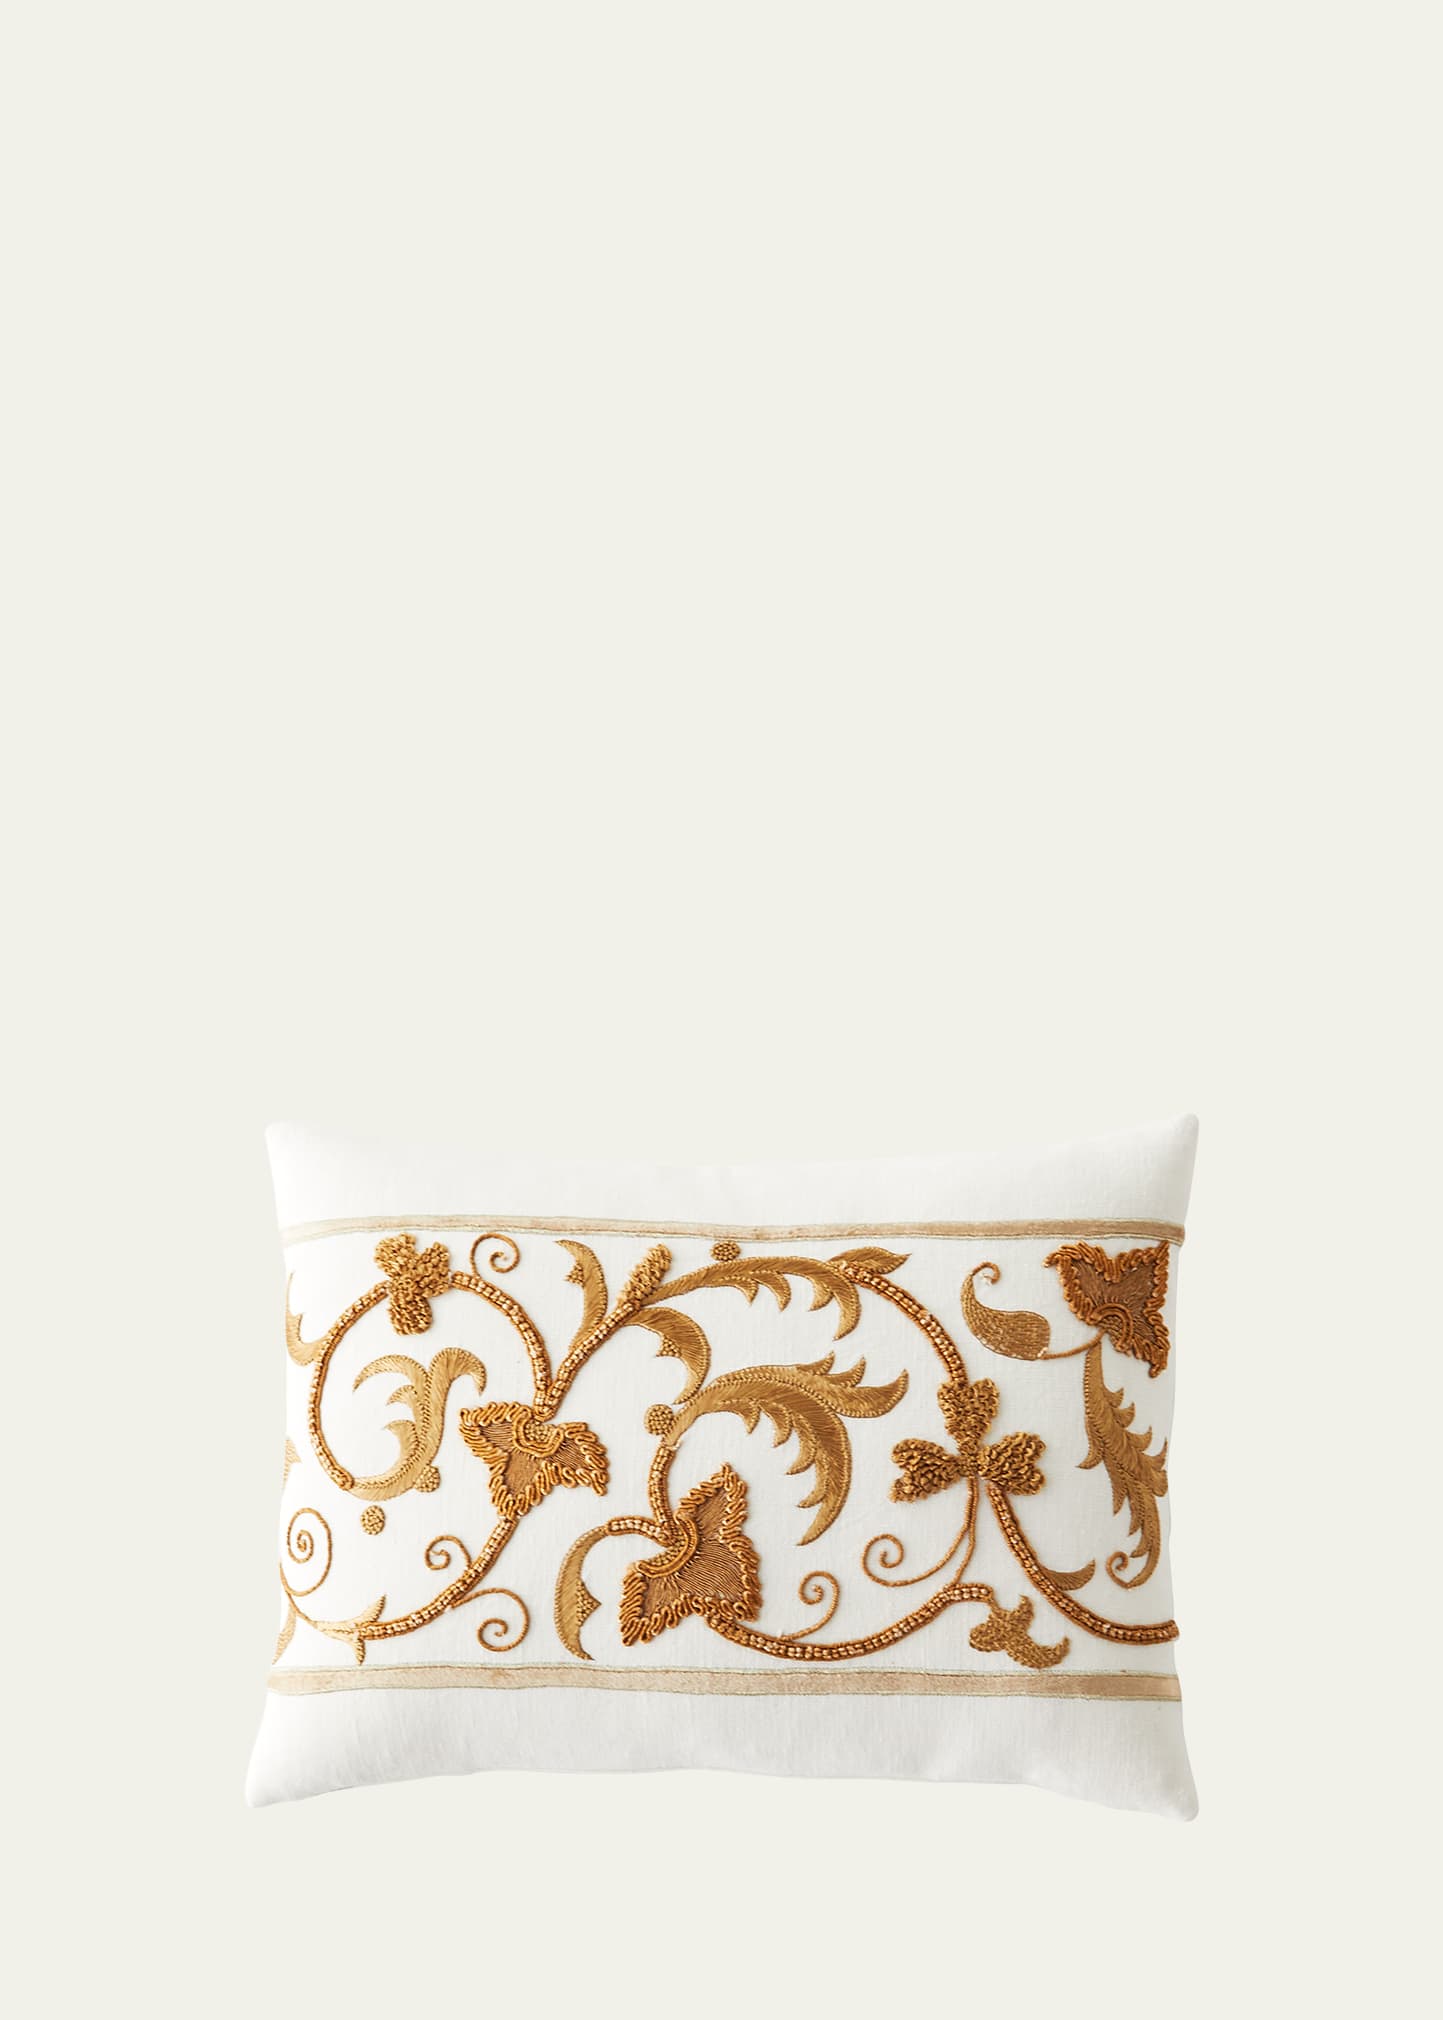 Aleksi Gold Floral Scroll Pillow, 15" x 21"